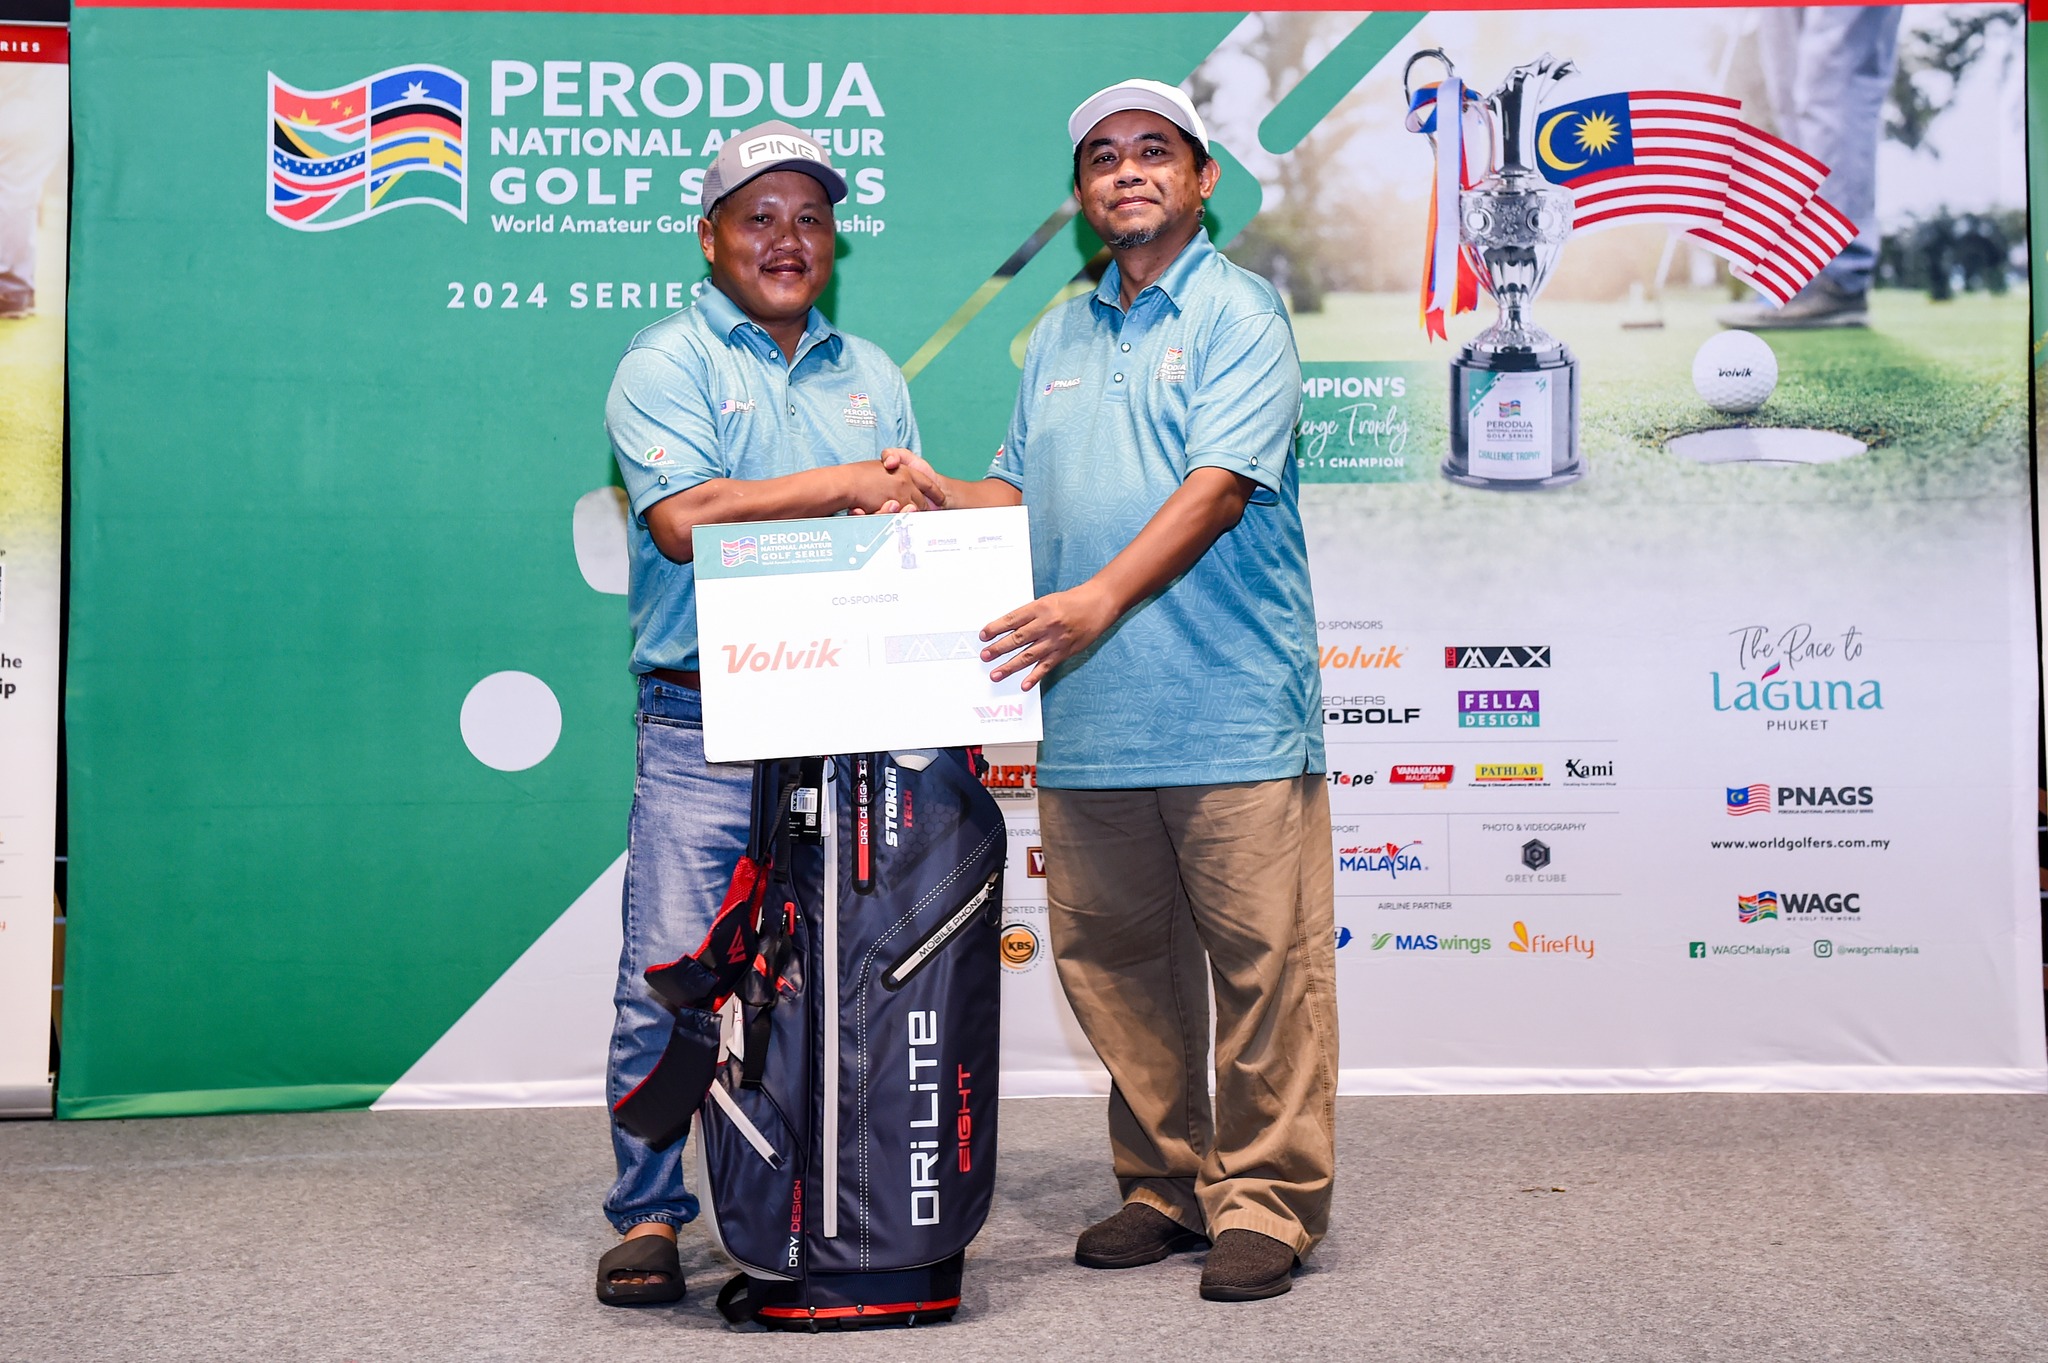 Perodua National Amateur 2024 Golf Series